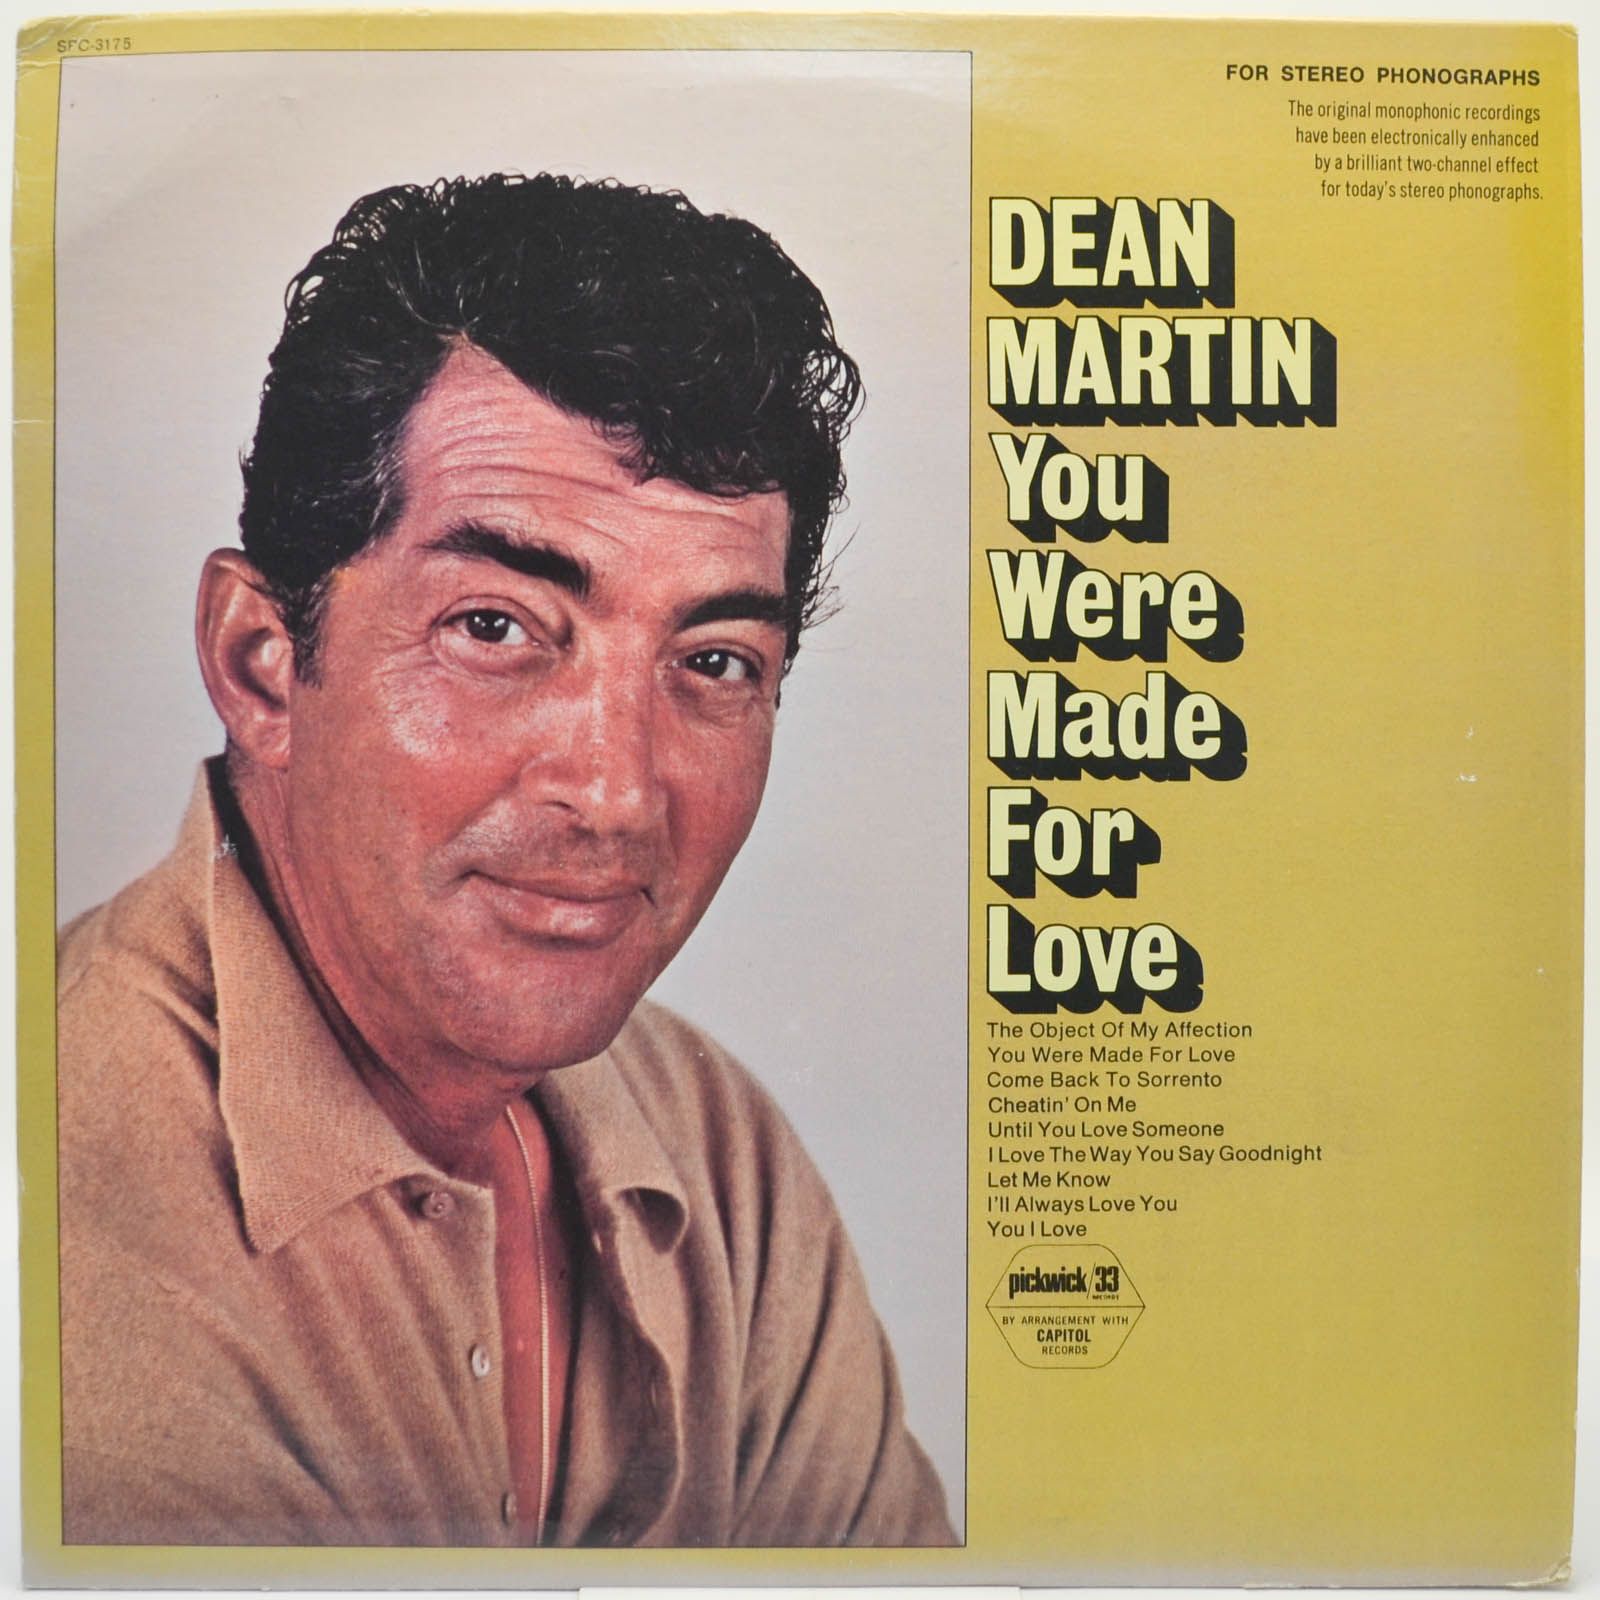 Dean Martin — You Were Made For Love (USA), 1971